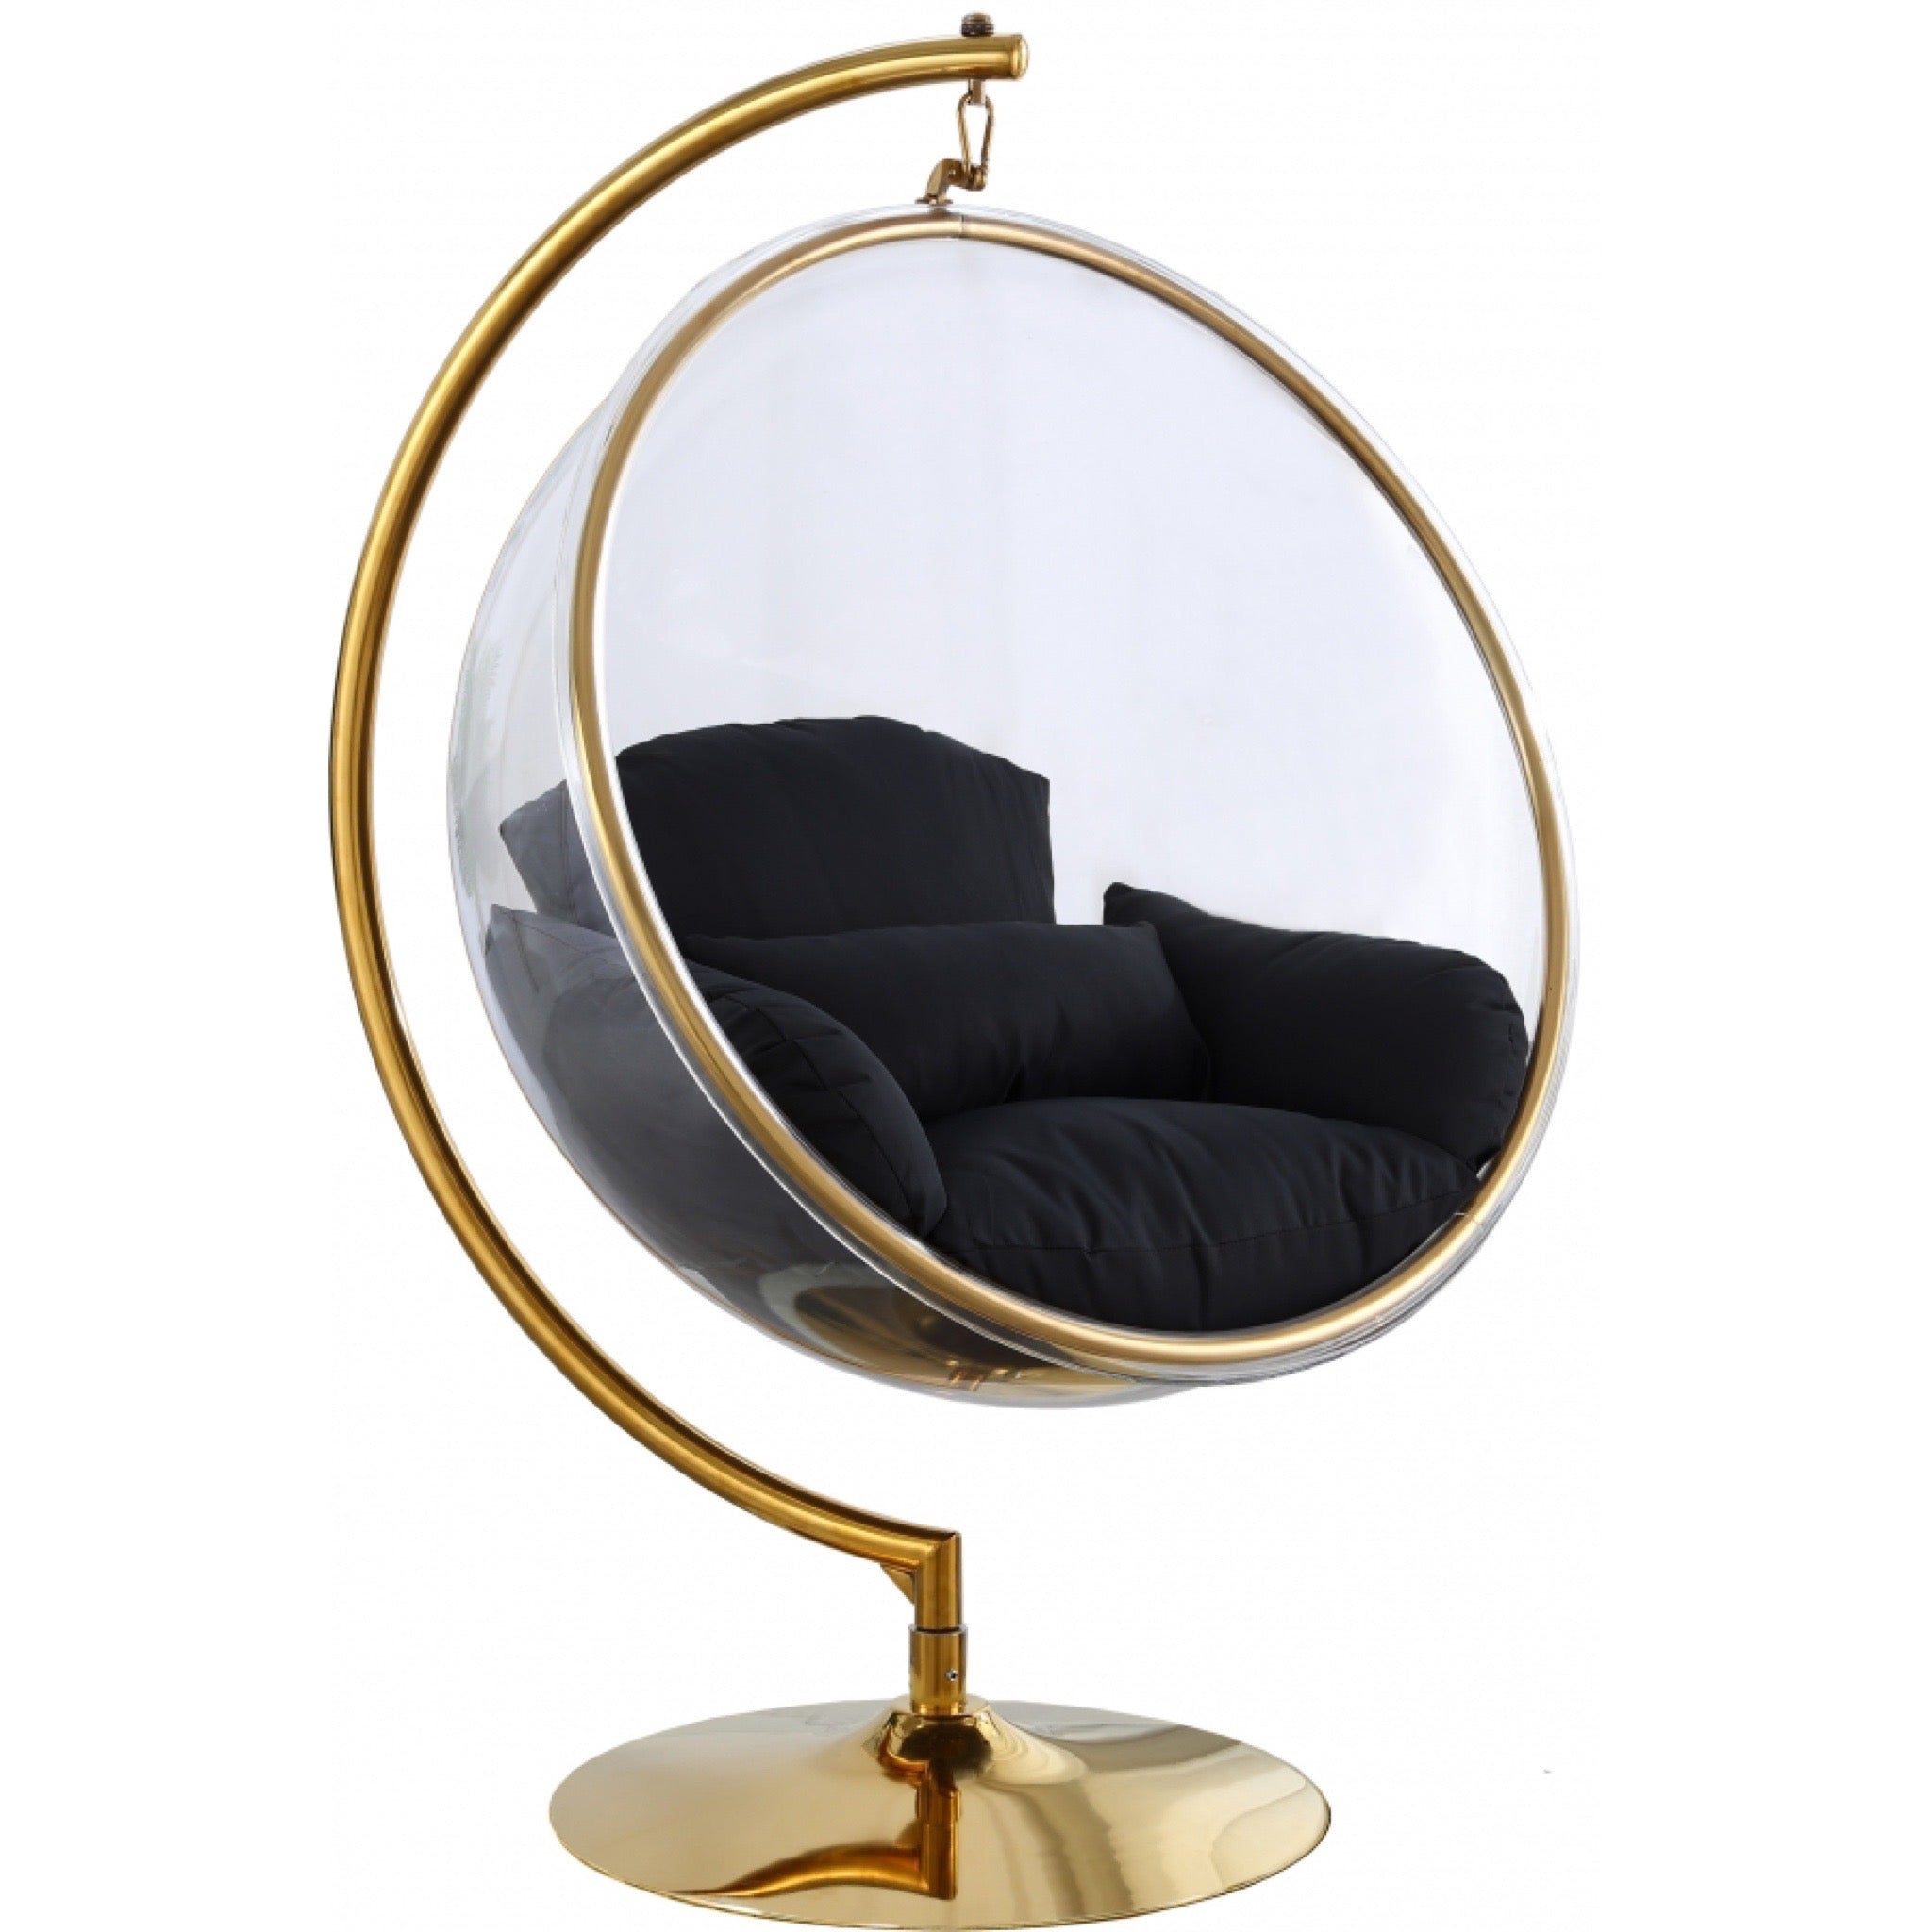 Luna Acrylic Swing Bubble Accent Chair - Black